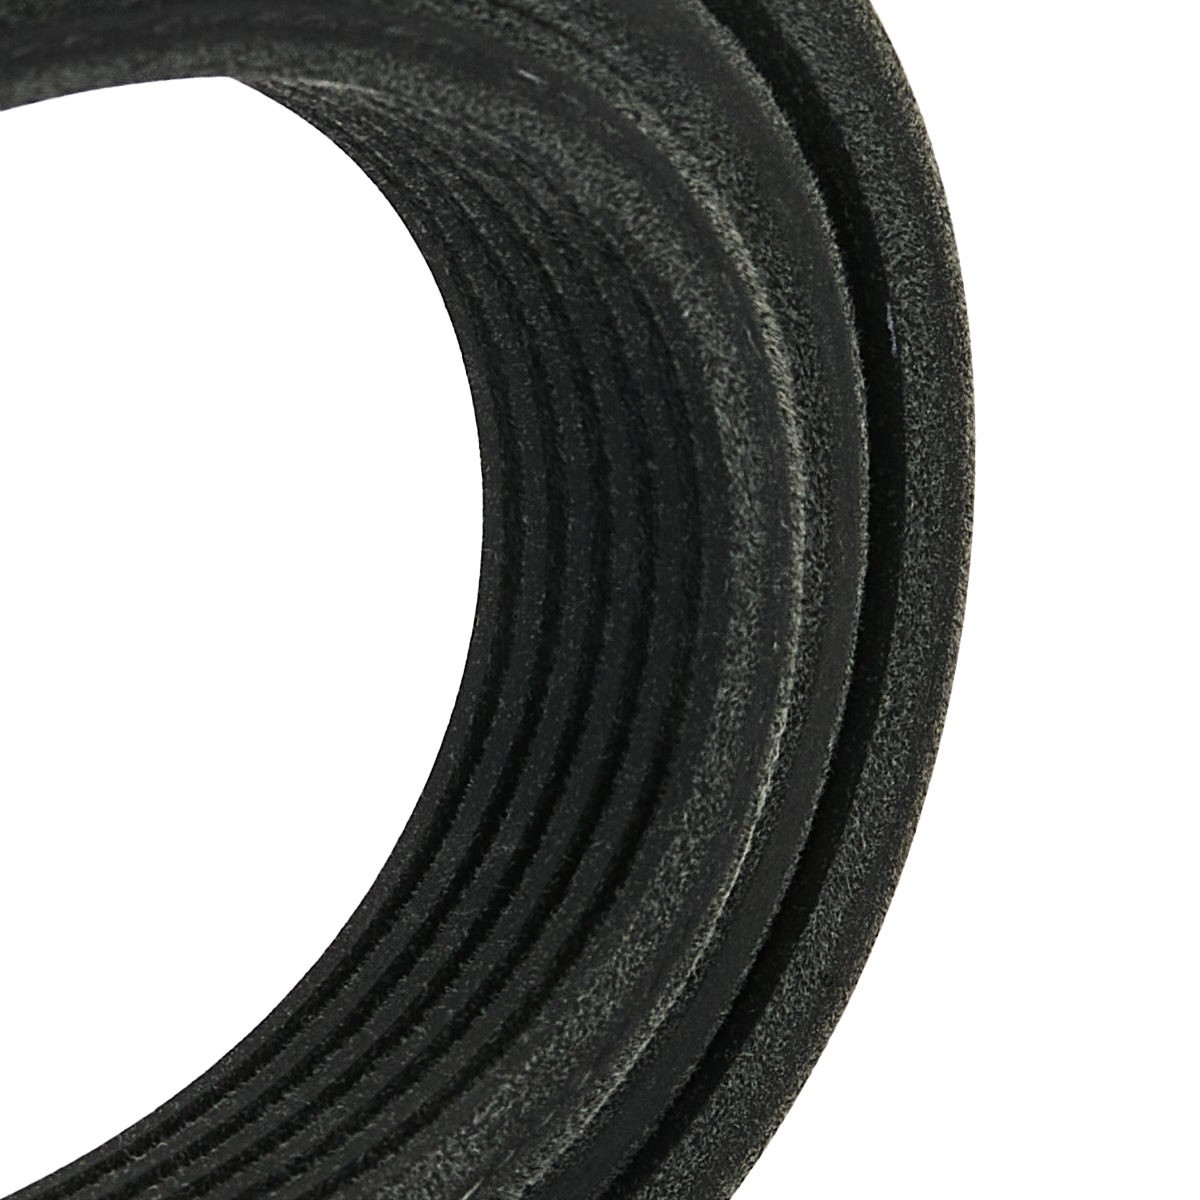 RIDEX 305P0532 Aux belt 2215mm, 6, EPDM (ethylene propylene diene Monomer (M-class) rubber)